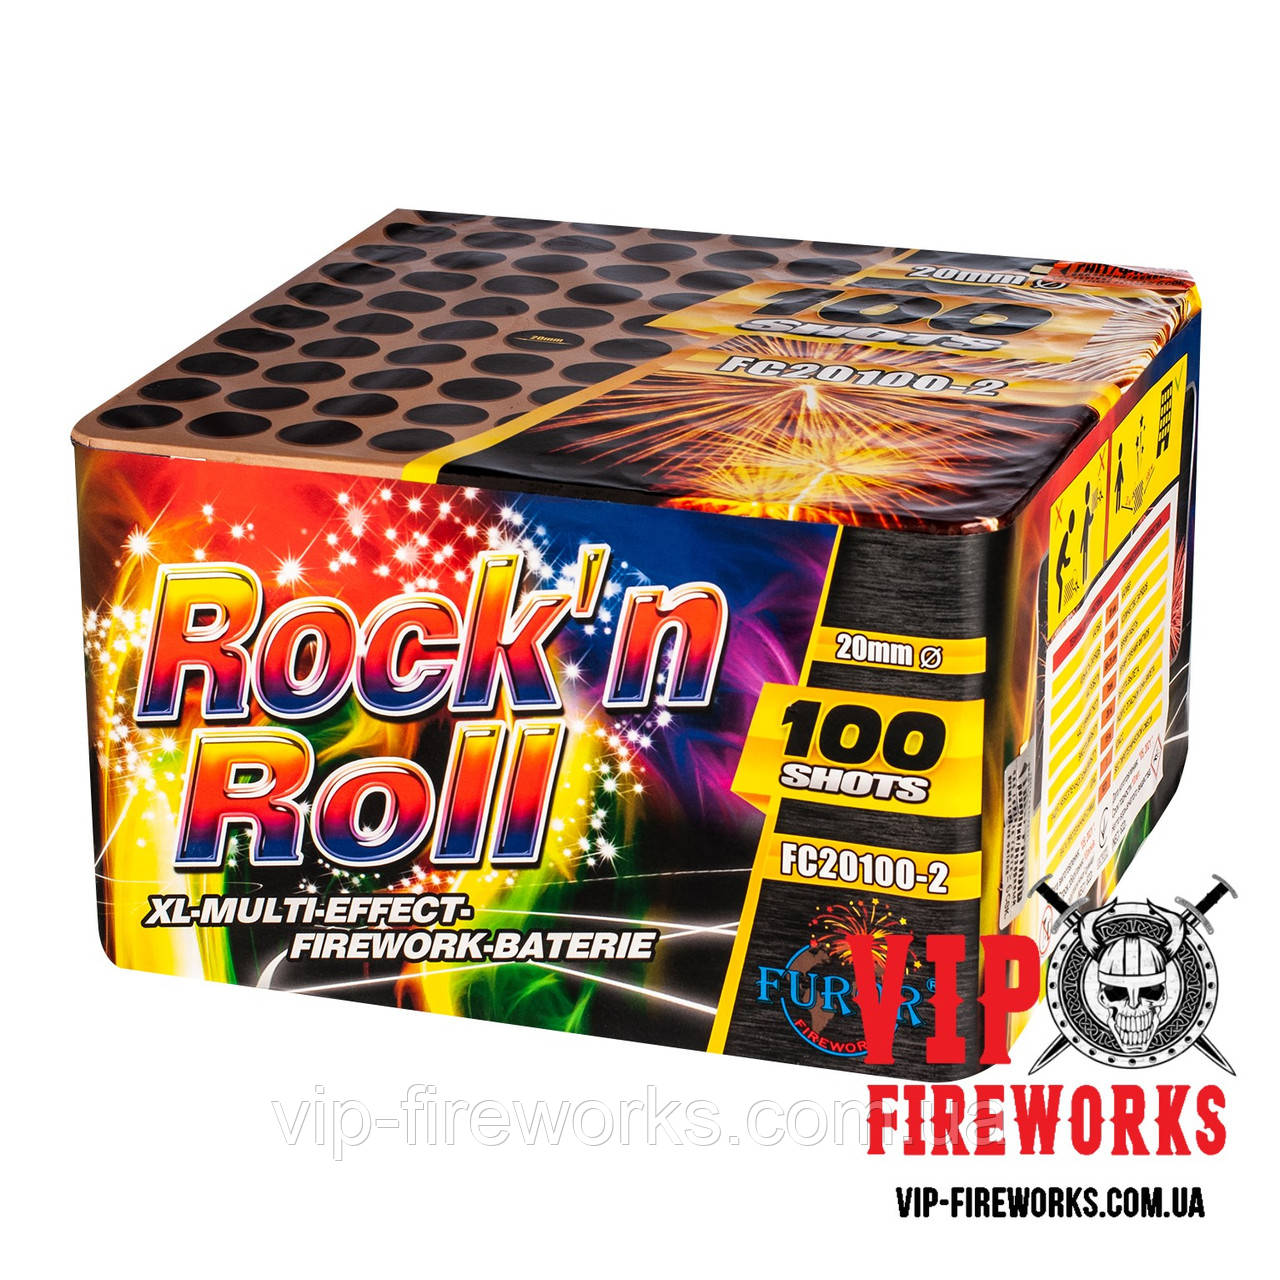 Салют на 100 выстрелов “Rock’n Roll” Фейерверк 20 калибр FC20100-2